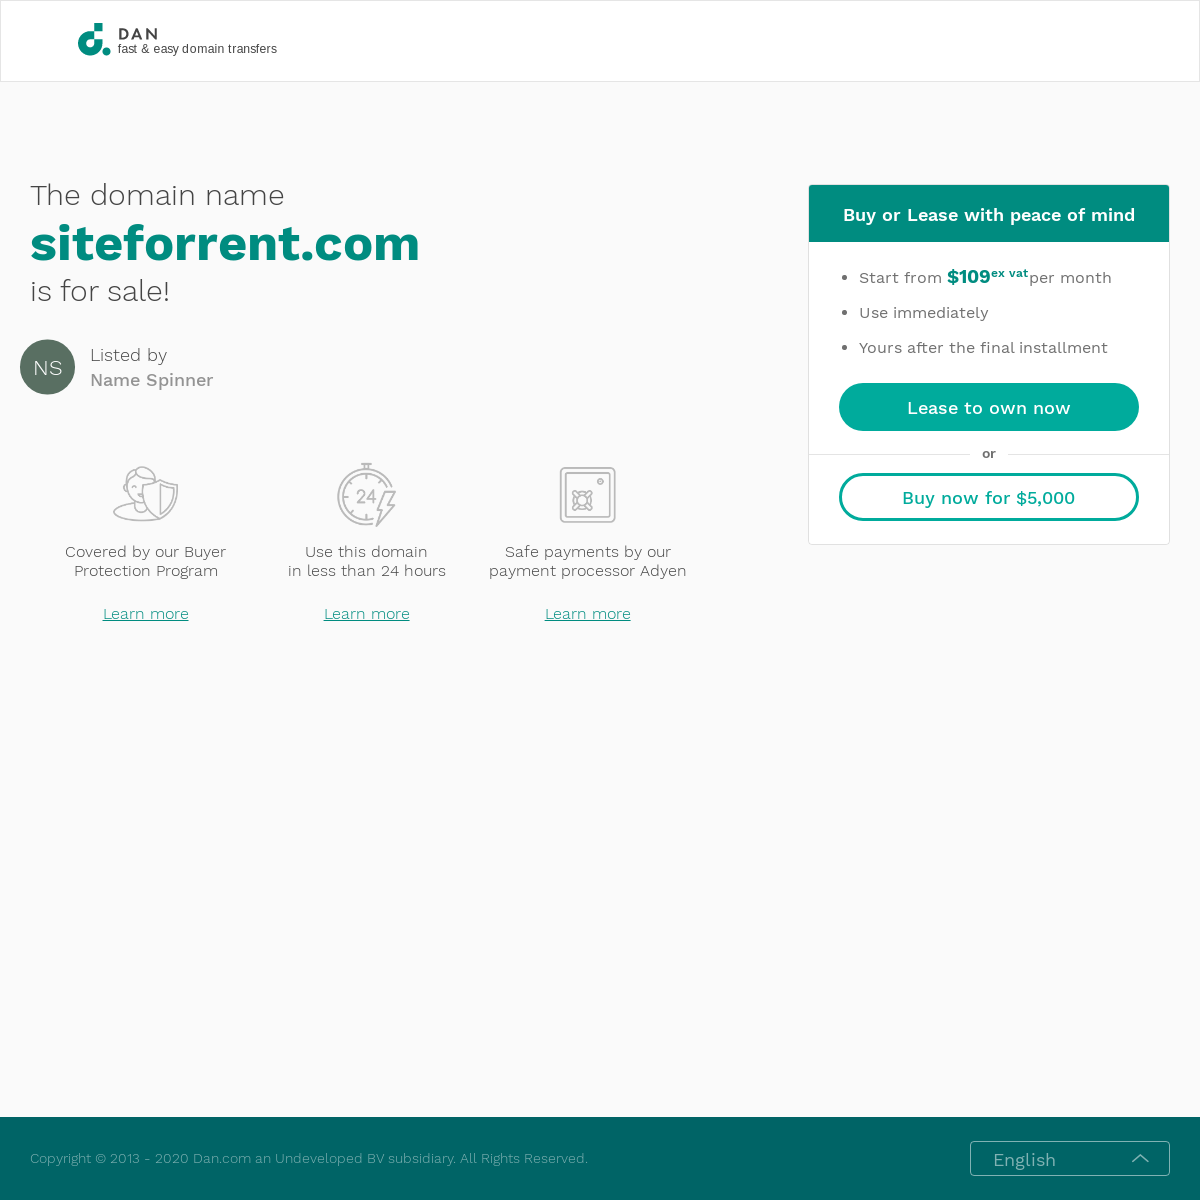 A complete backup of siteforrent.com